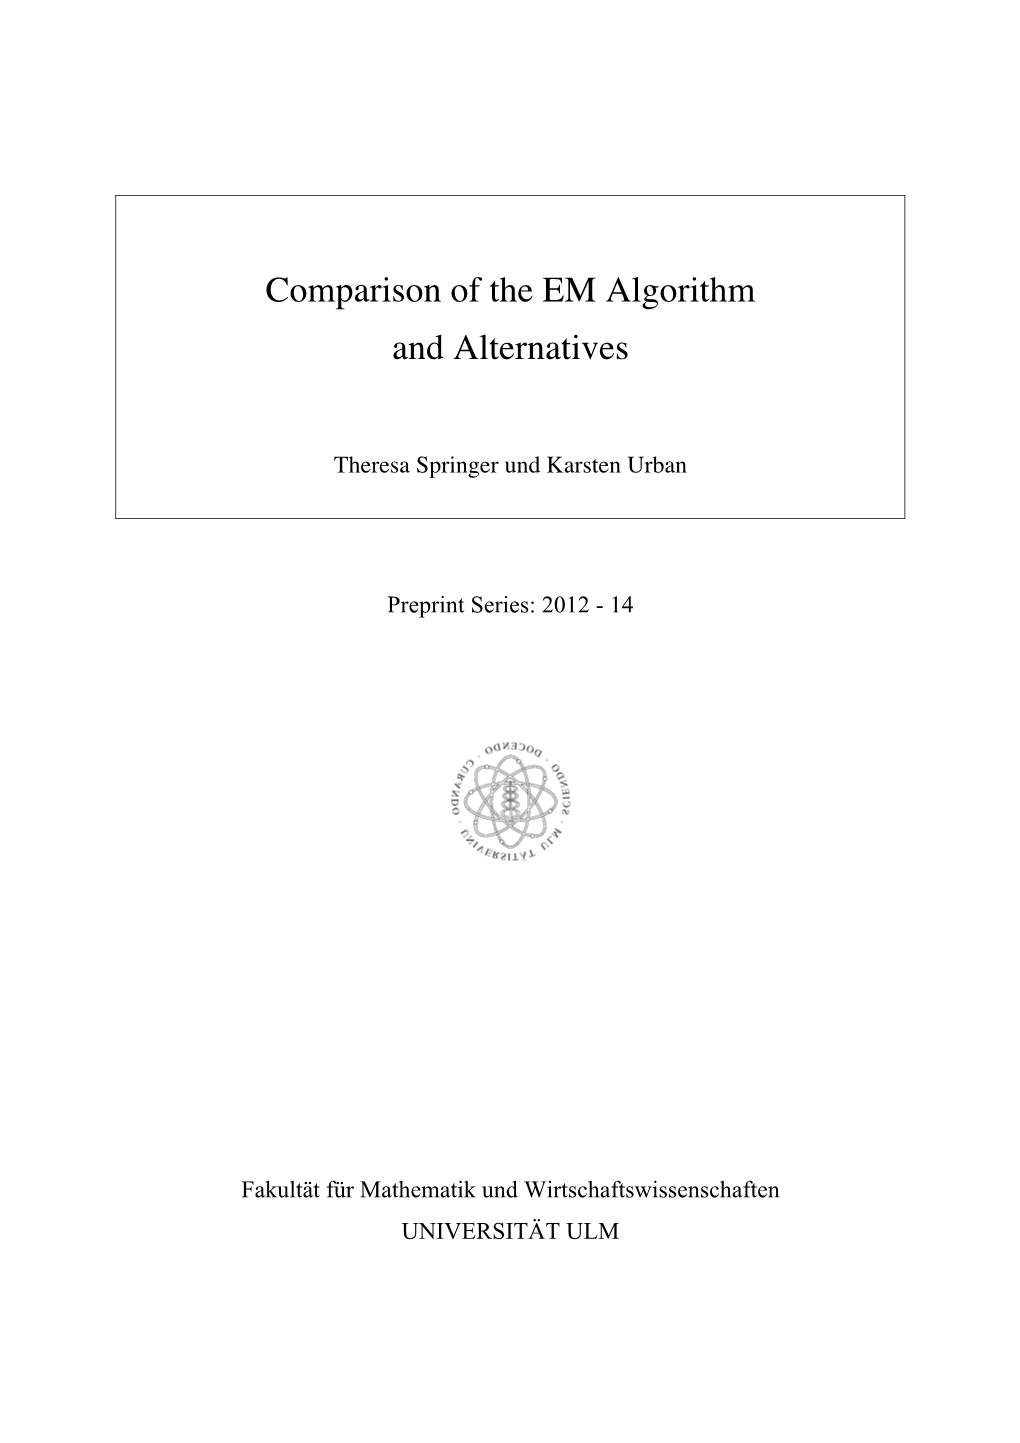 Comparison of the Em Algorithm and Alternatives